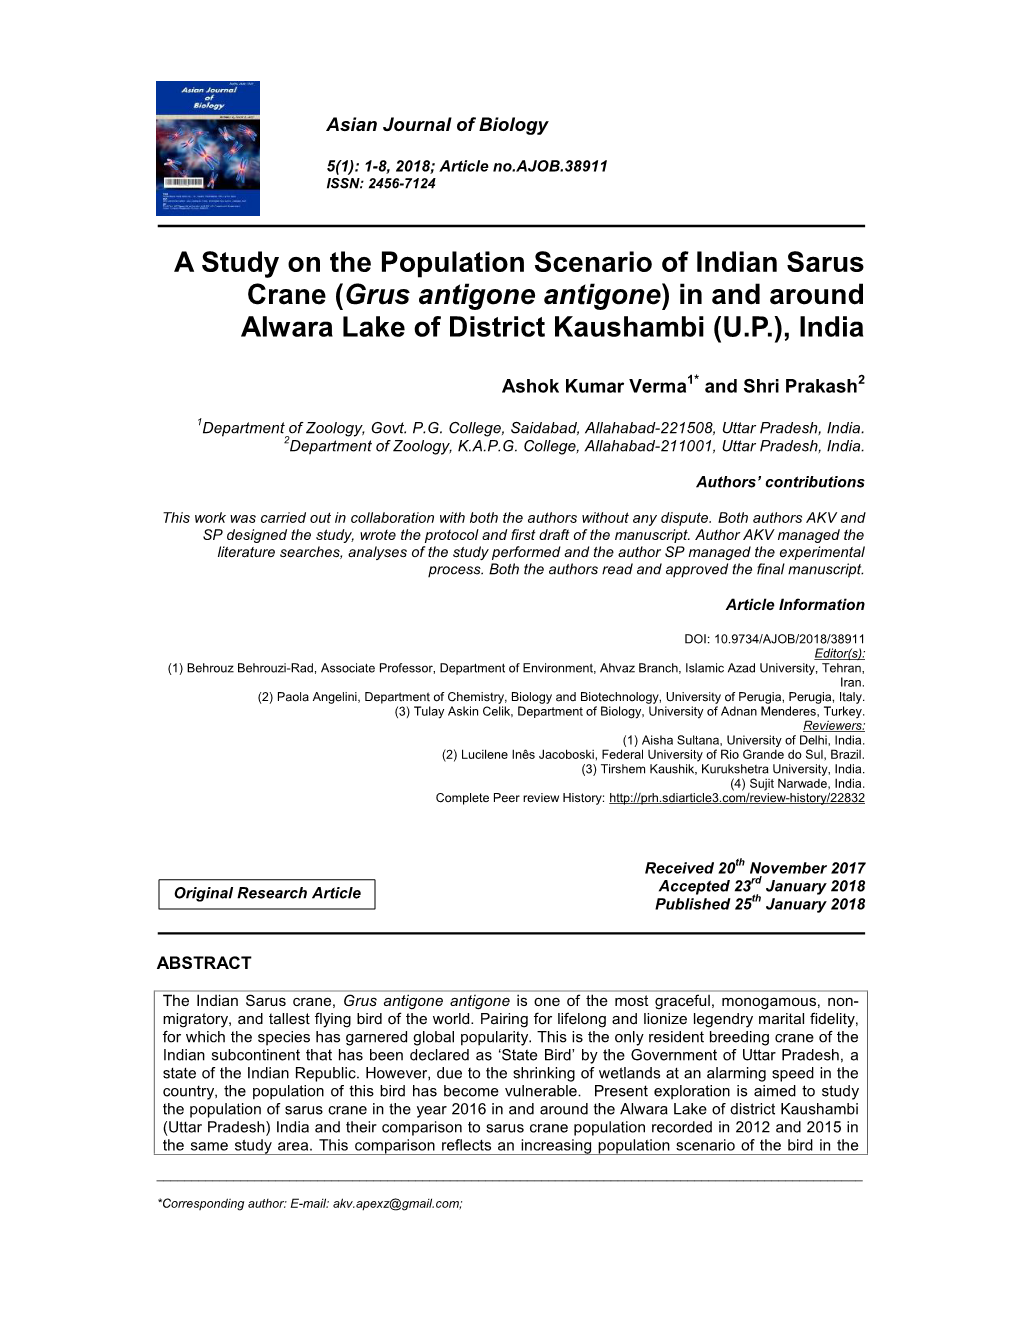 A Study on the Population Scenario of Indian Sarus Crane (Grus Antigone Antigone) in and Around Alwara Lake of District Kaushambi (U.P.), India